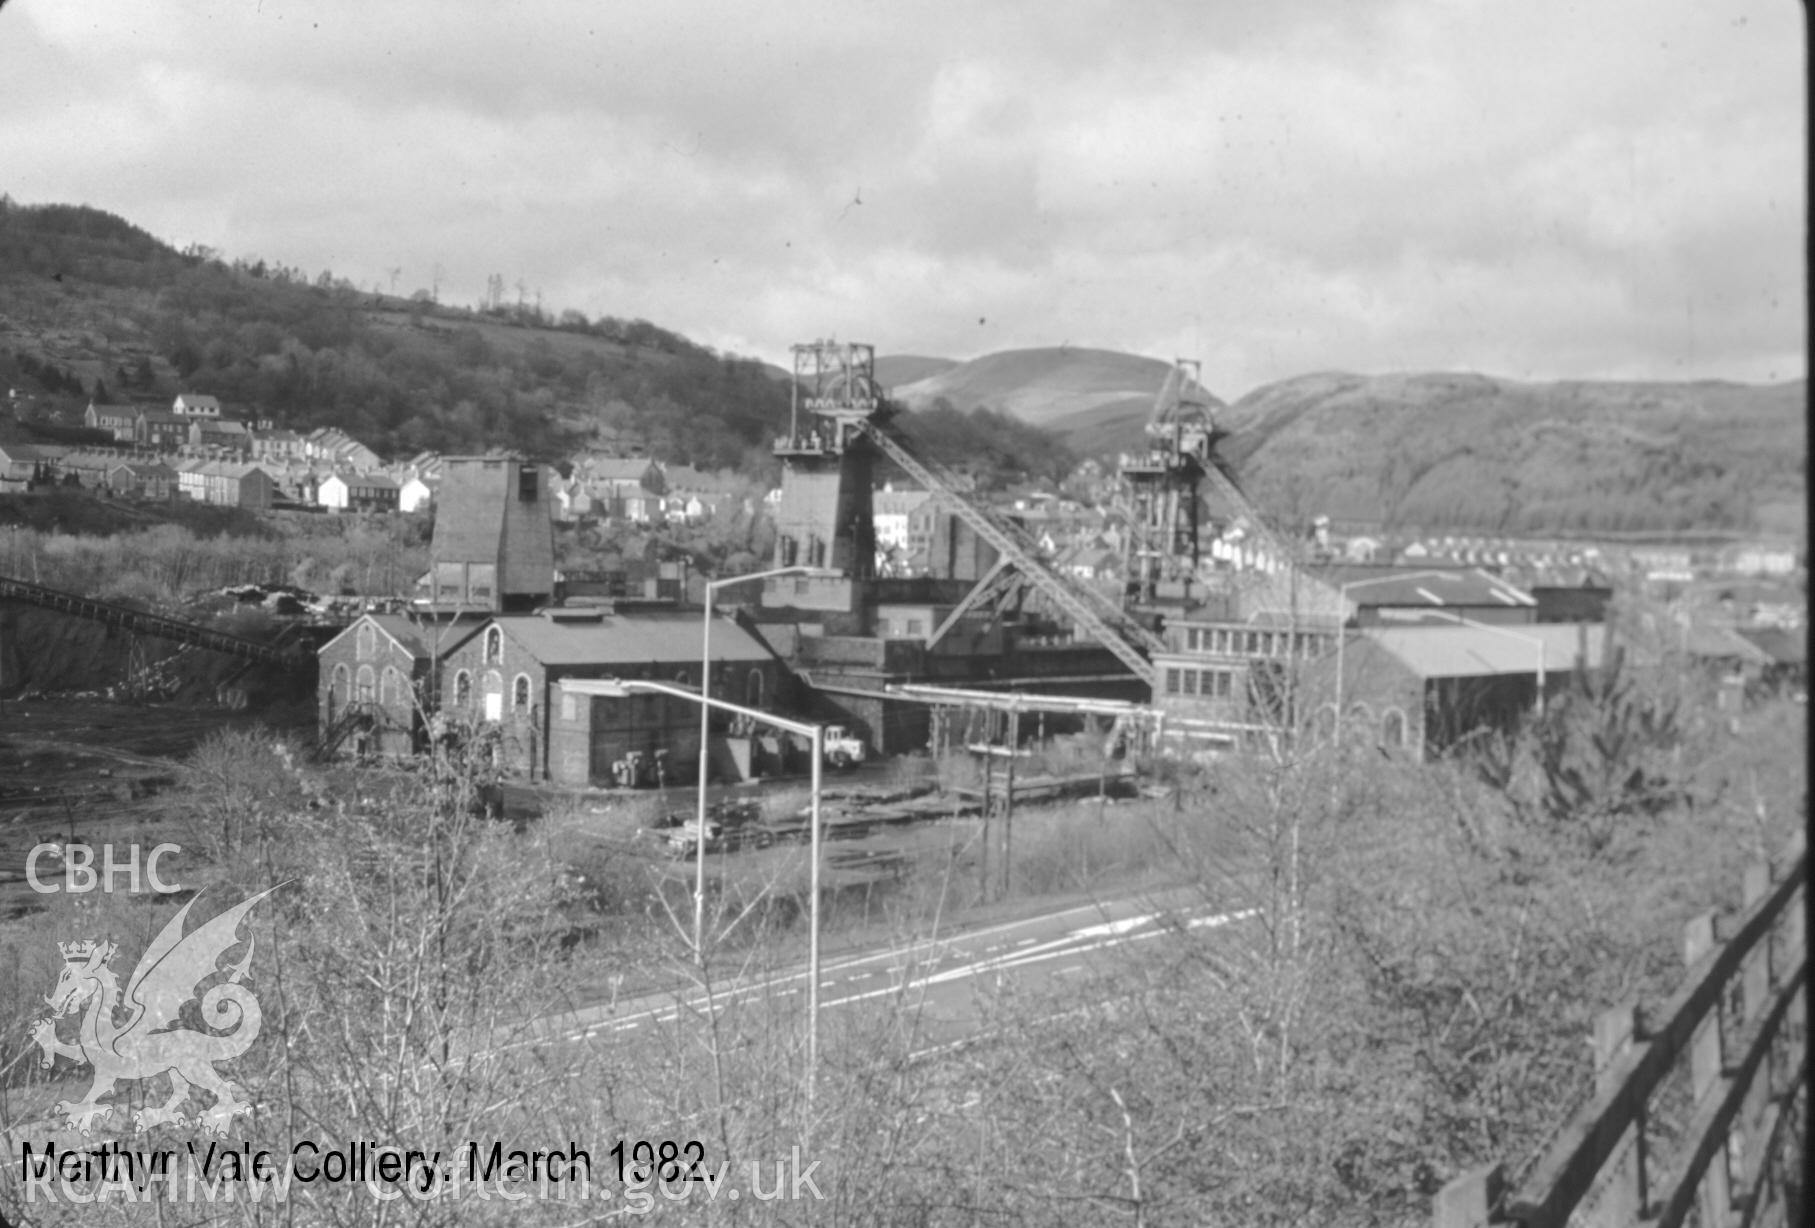 Digital photograph showing Merthyr Vale colliery, taken 1982.